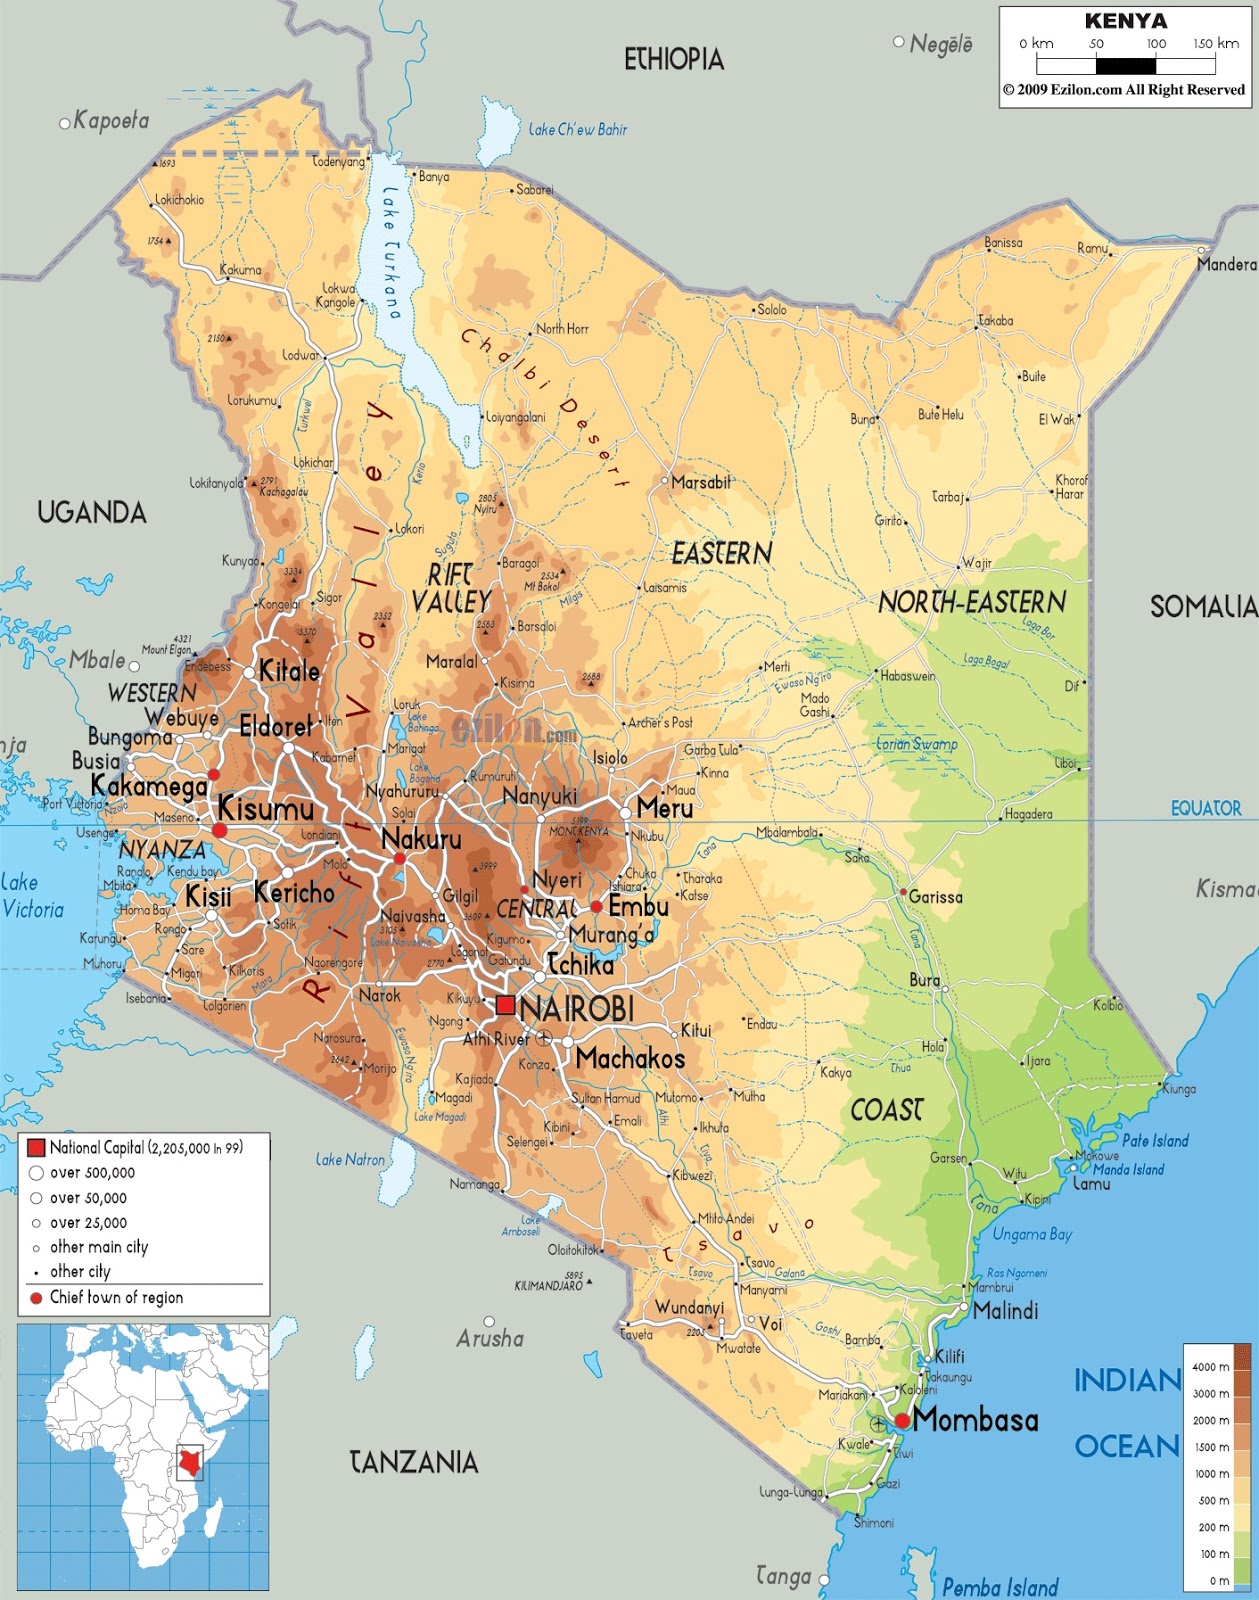 ANTHROPOLOGY OF ACCORD: Map on Monday: KENYA